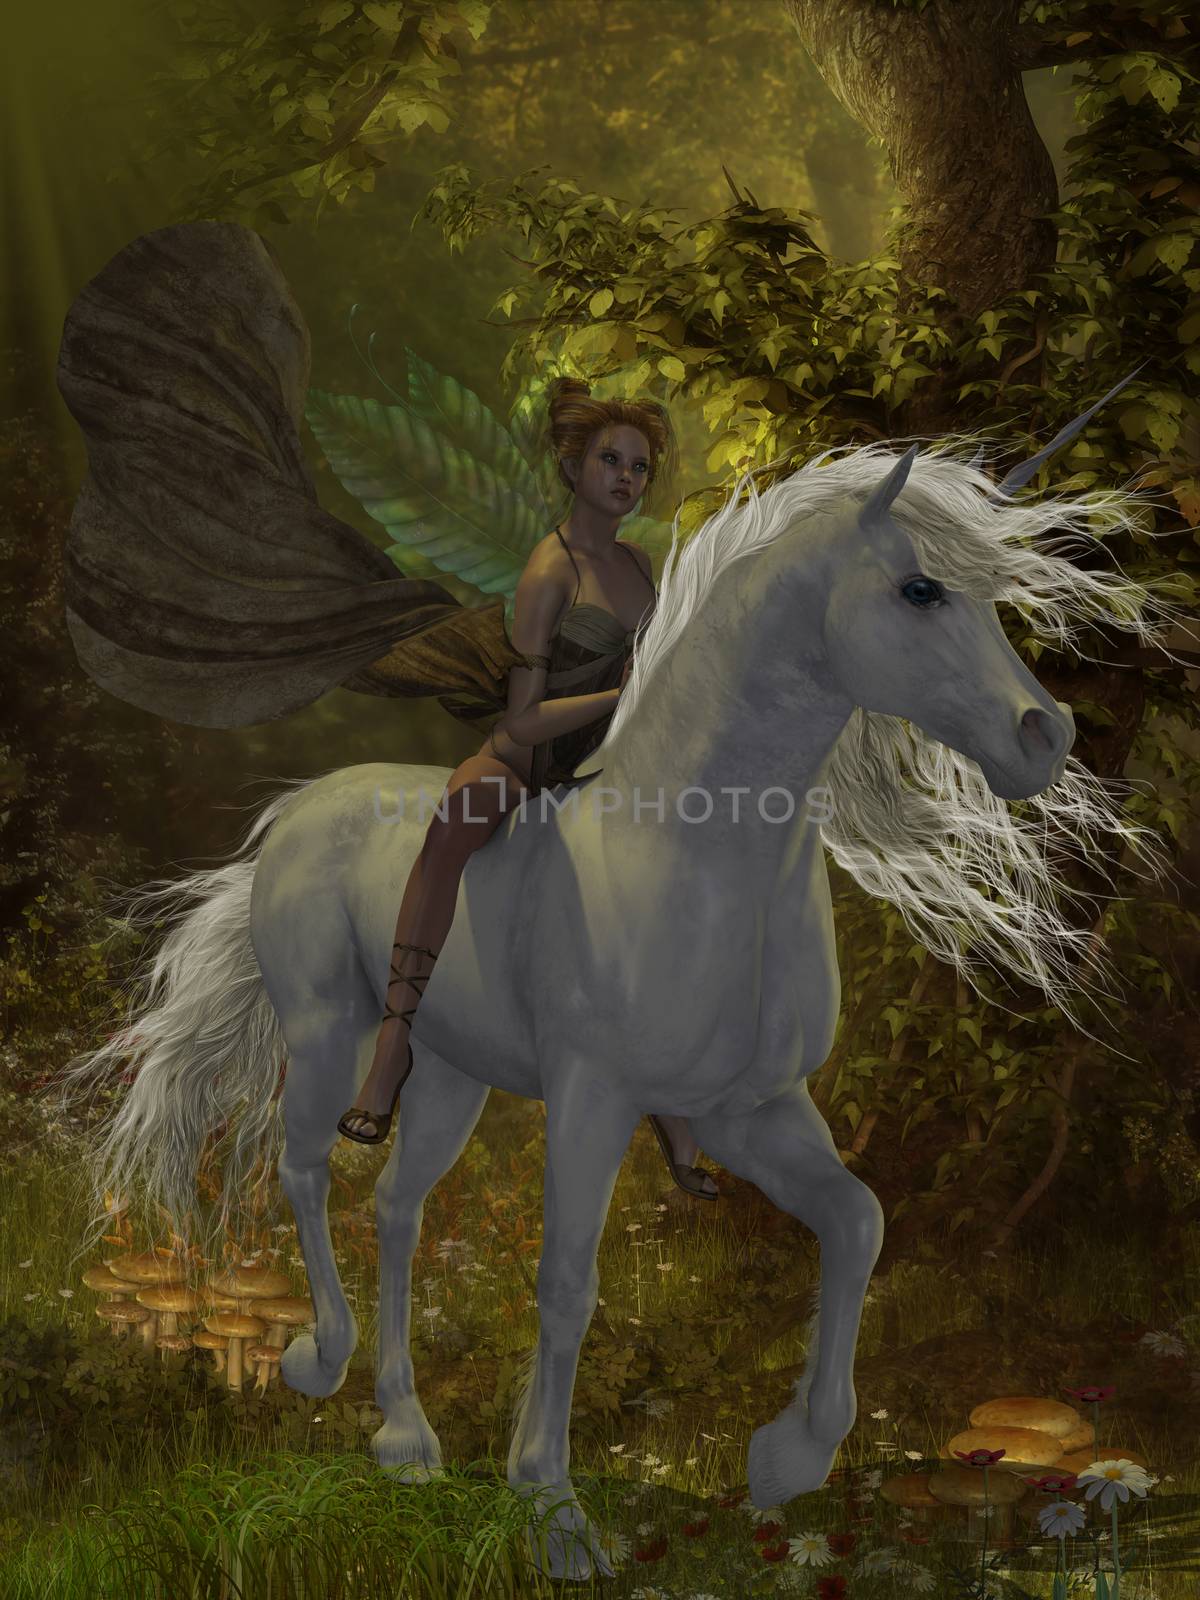 A fairy rides a wild white unicorn through the magical forest.